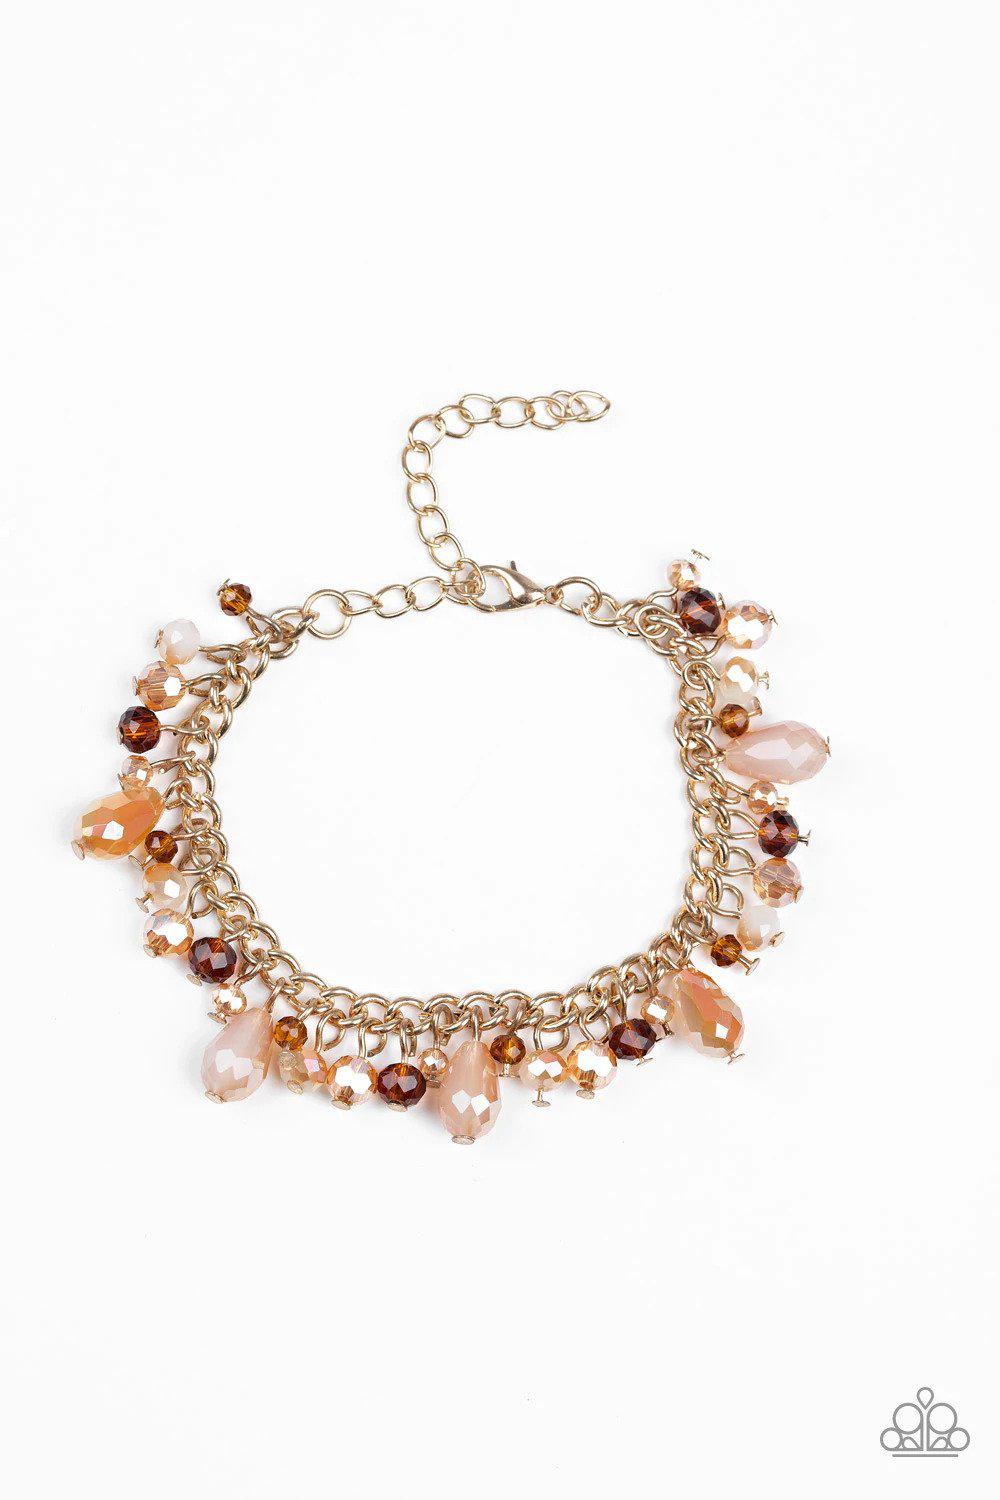 Catwalk Crawl Gold Bracelet - Paparazzi Accessories- lightbox - CarasShop.com - $5 Jewelry by Cara Jewels